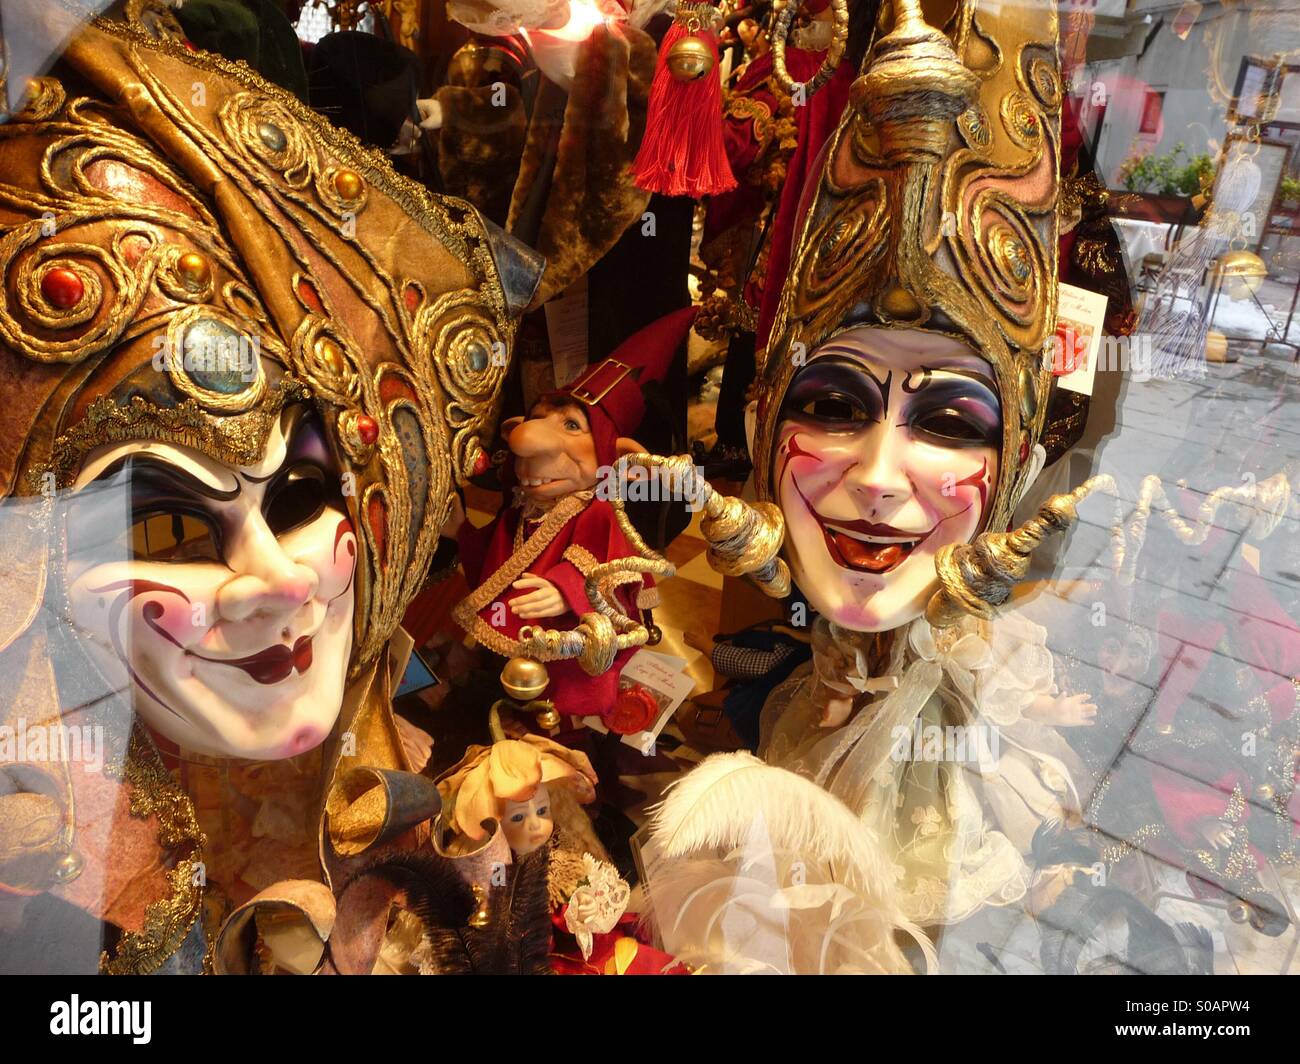 Carnevale masks Stock Photo